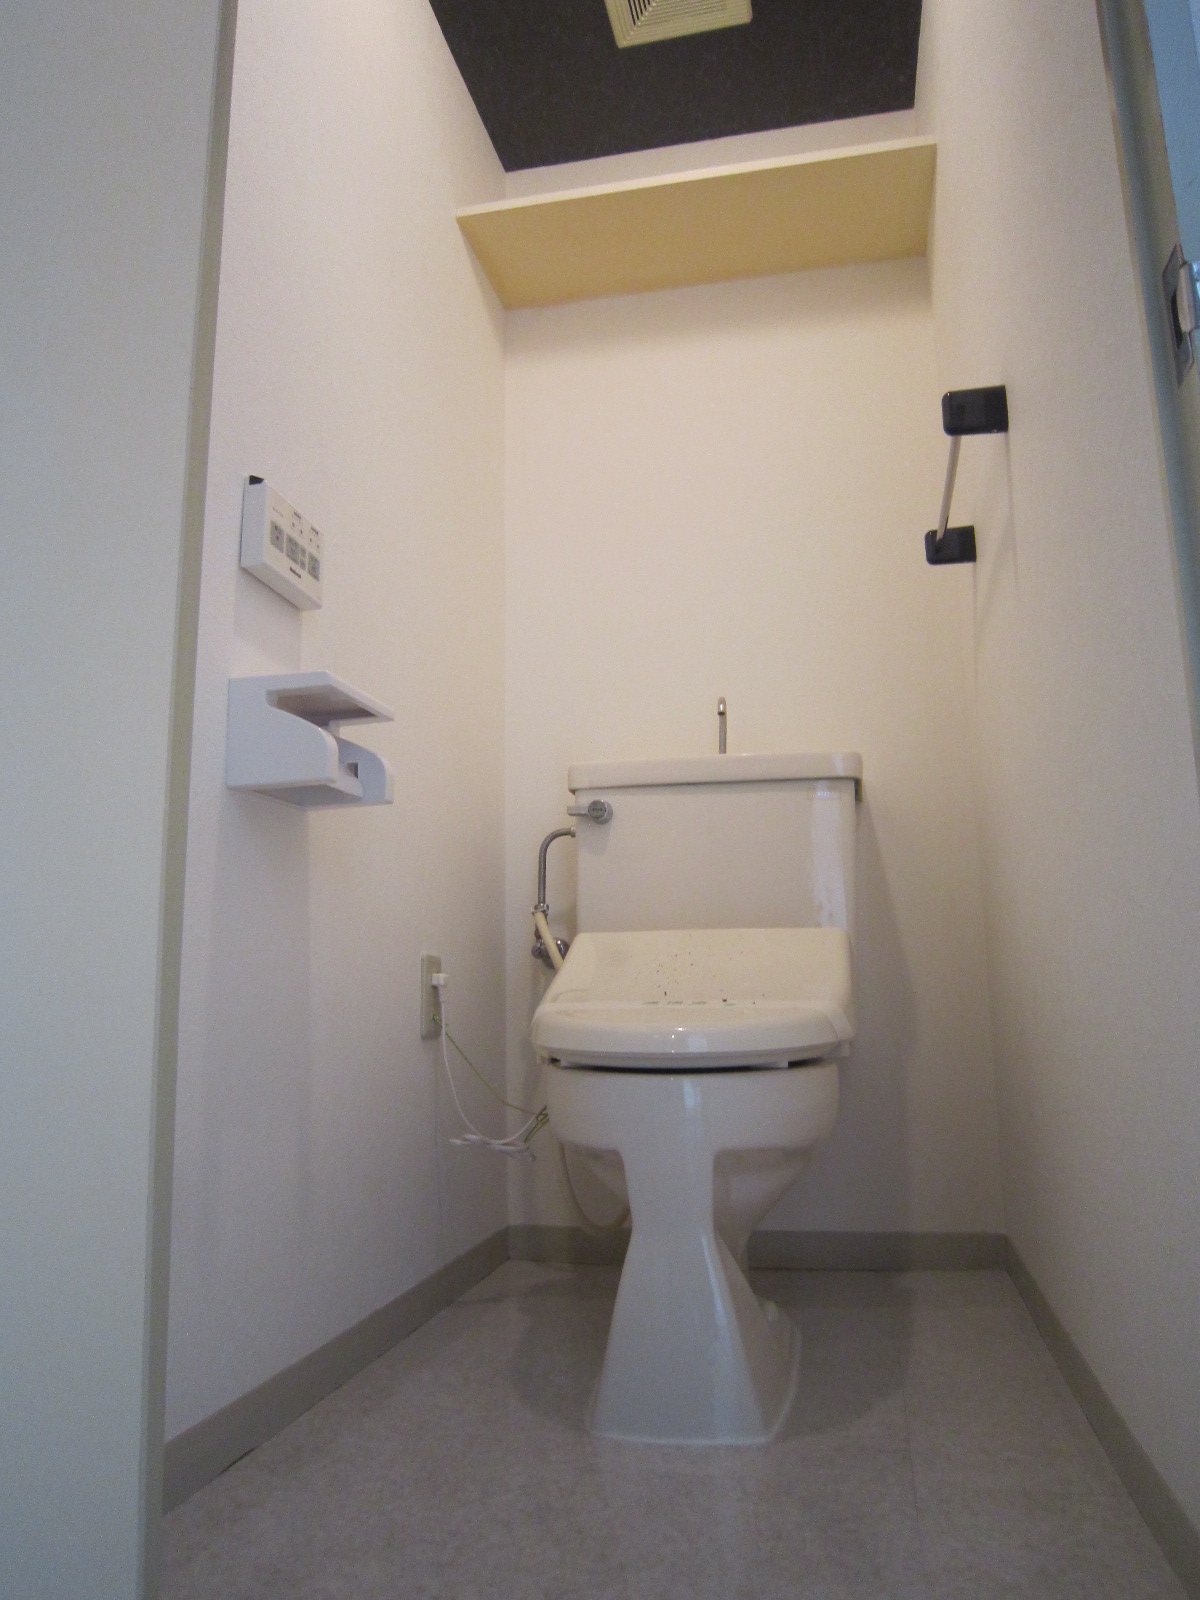 Toilet. Bidet + heating toilet seat